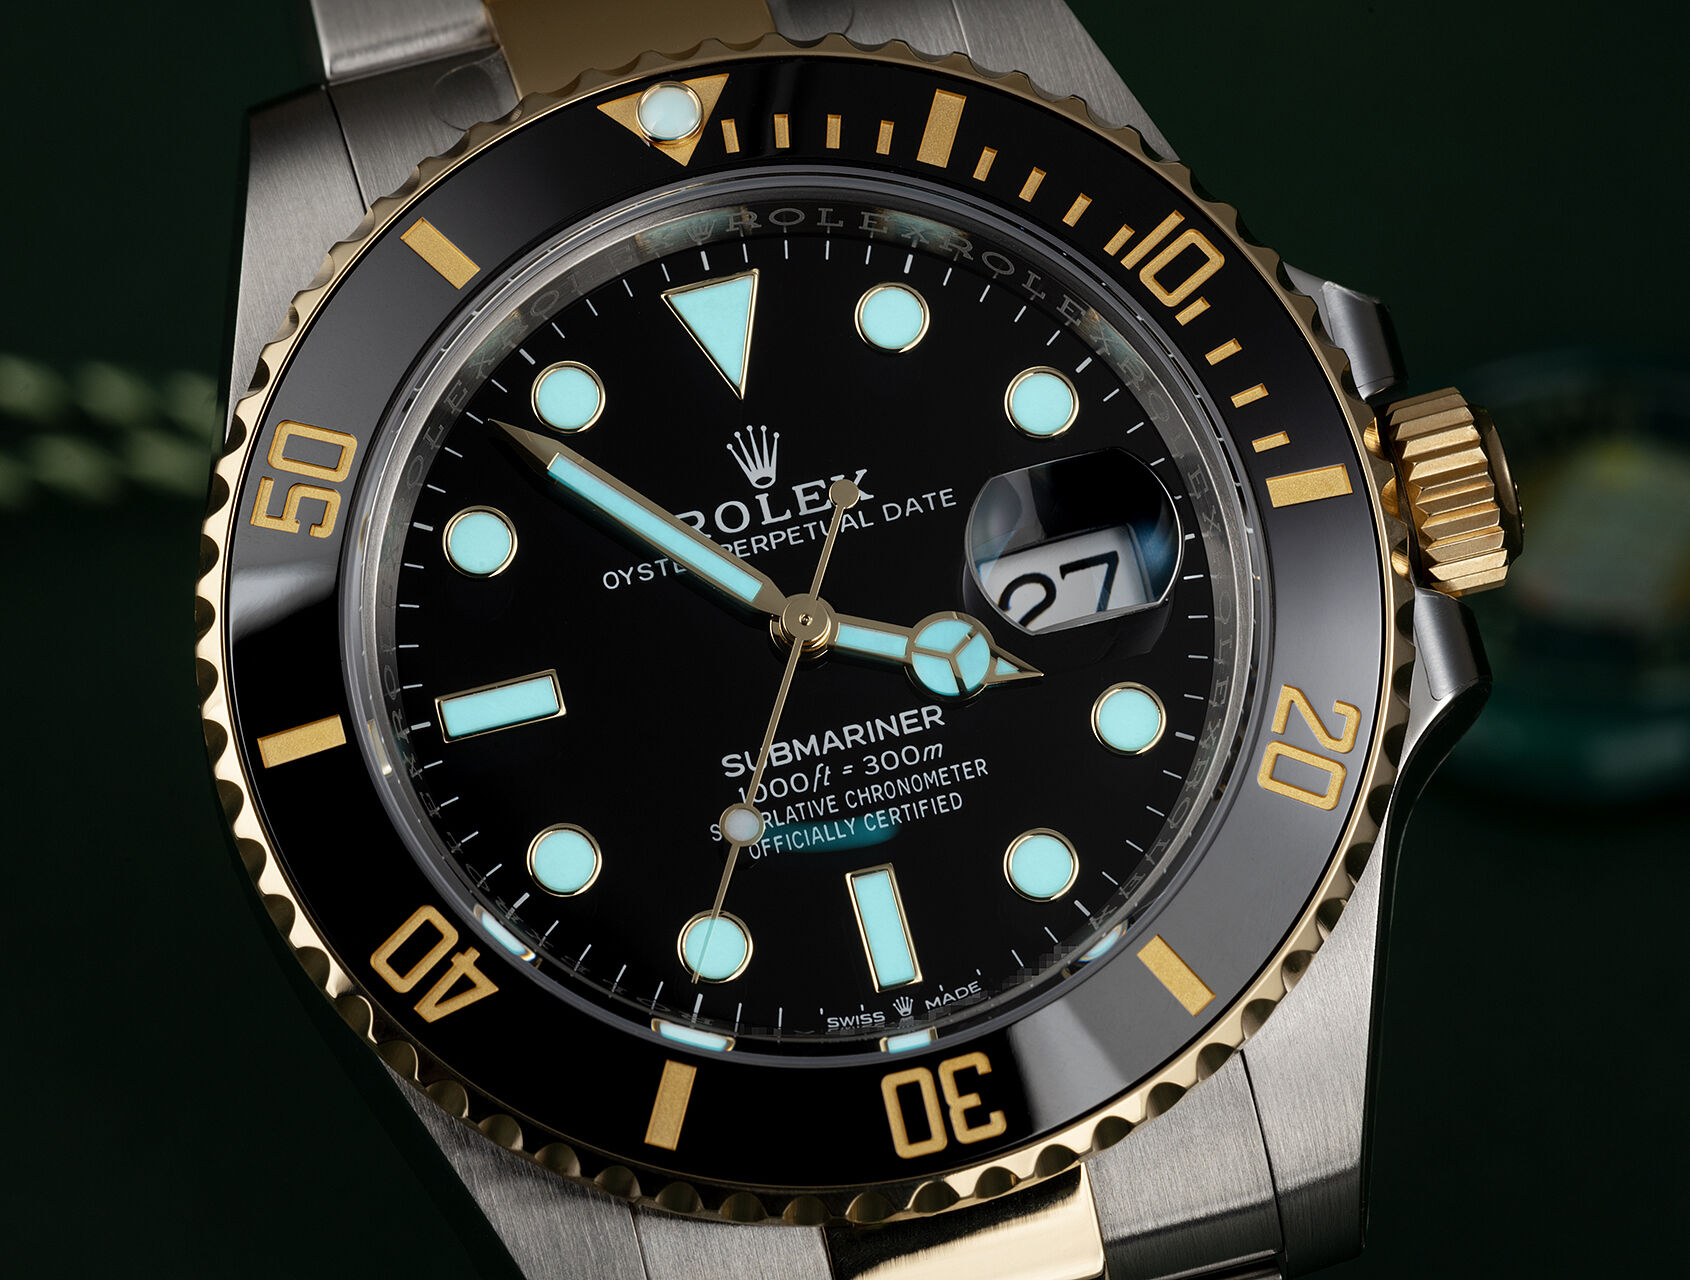 ref 126613LN | 126613LN - UK Retailed | Rolex Submariner Date